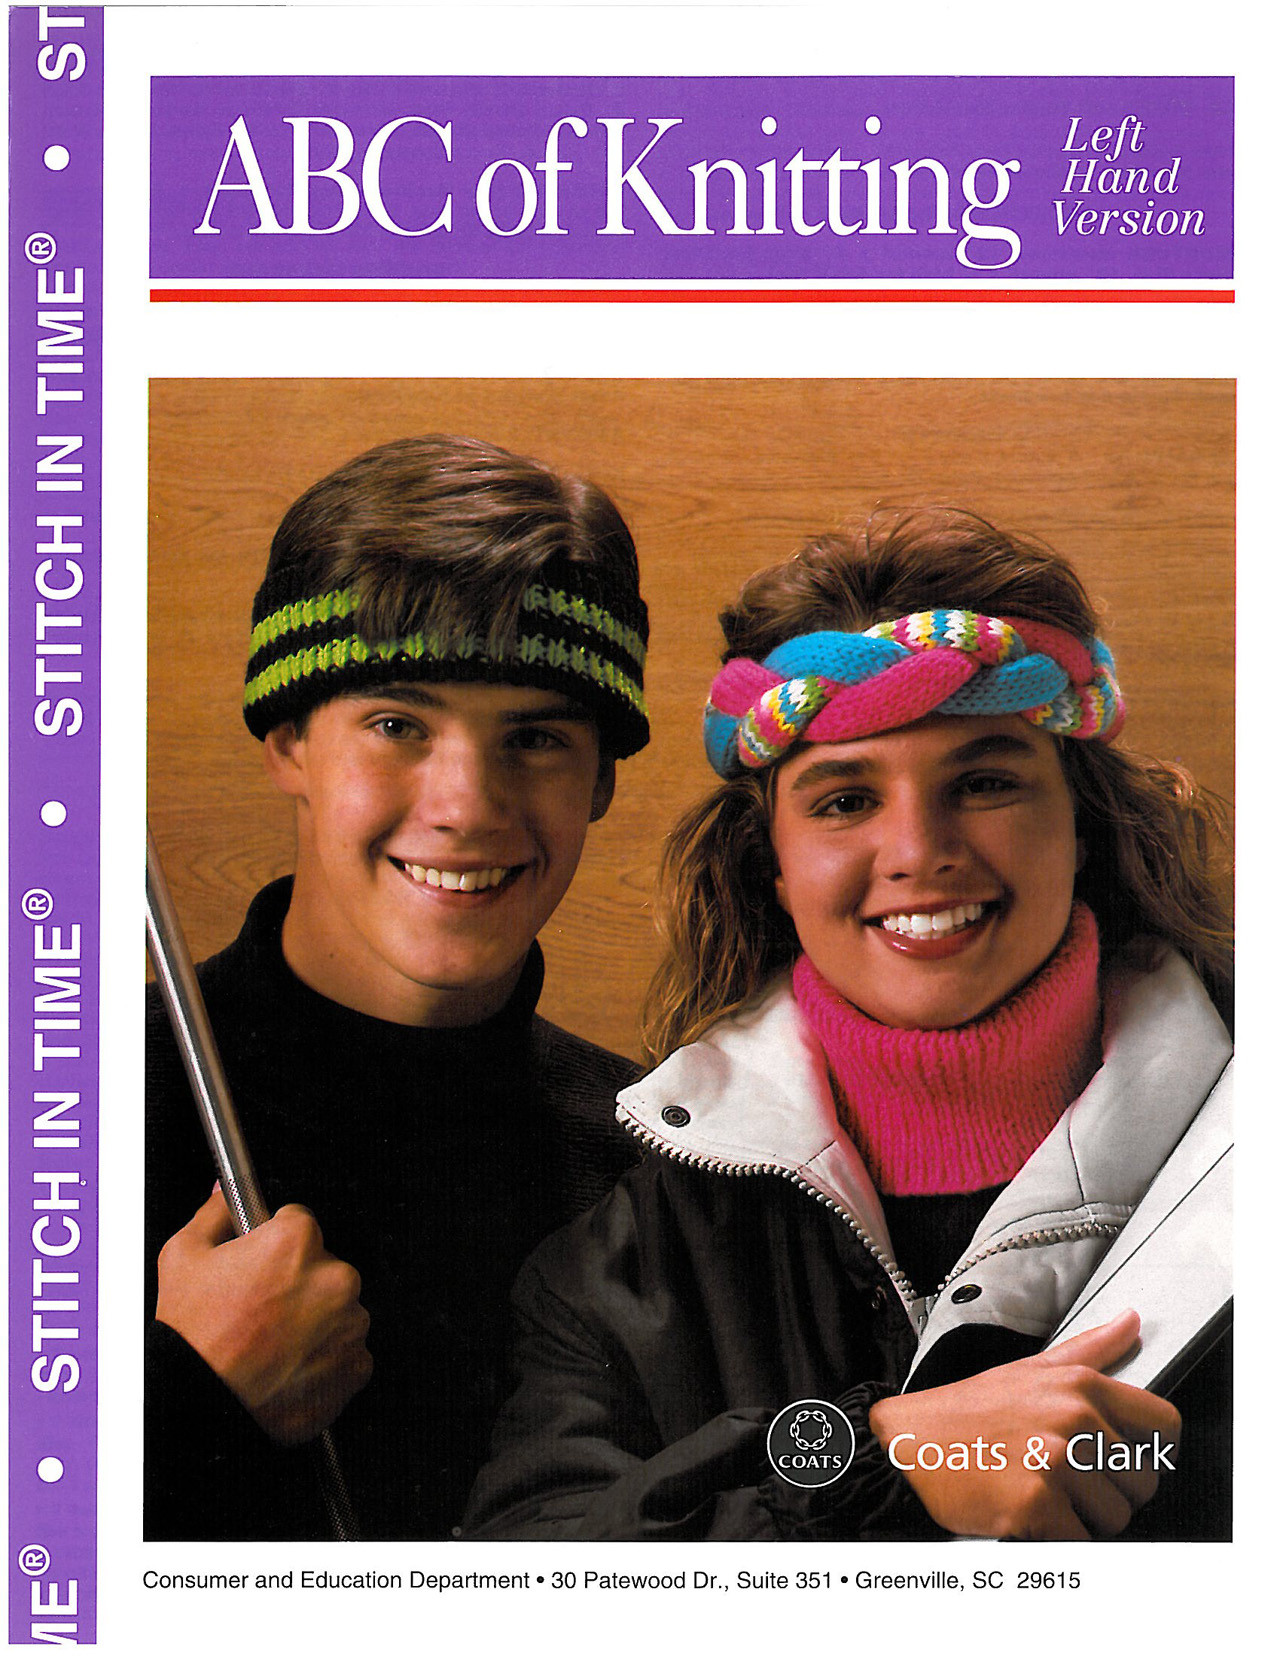 ABC of Knitting – Left Hand Version